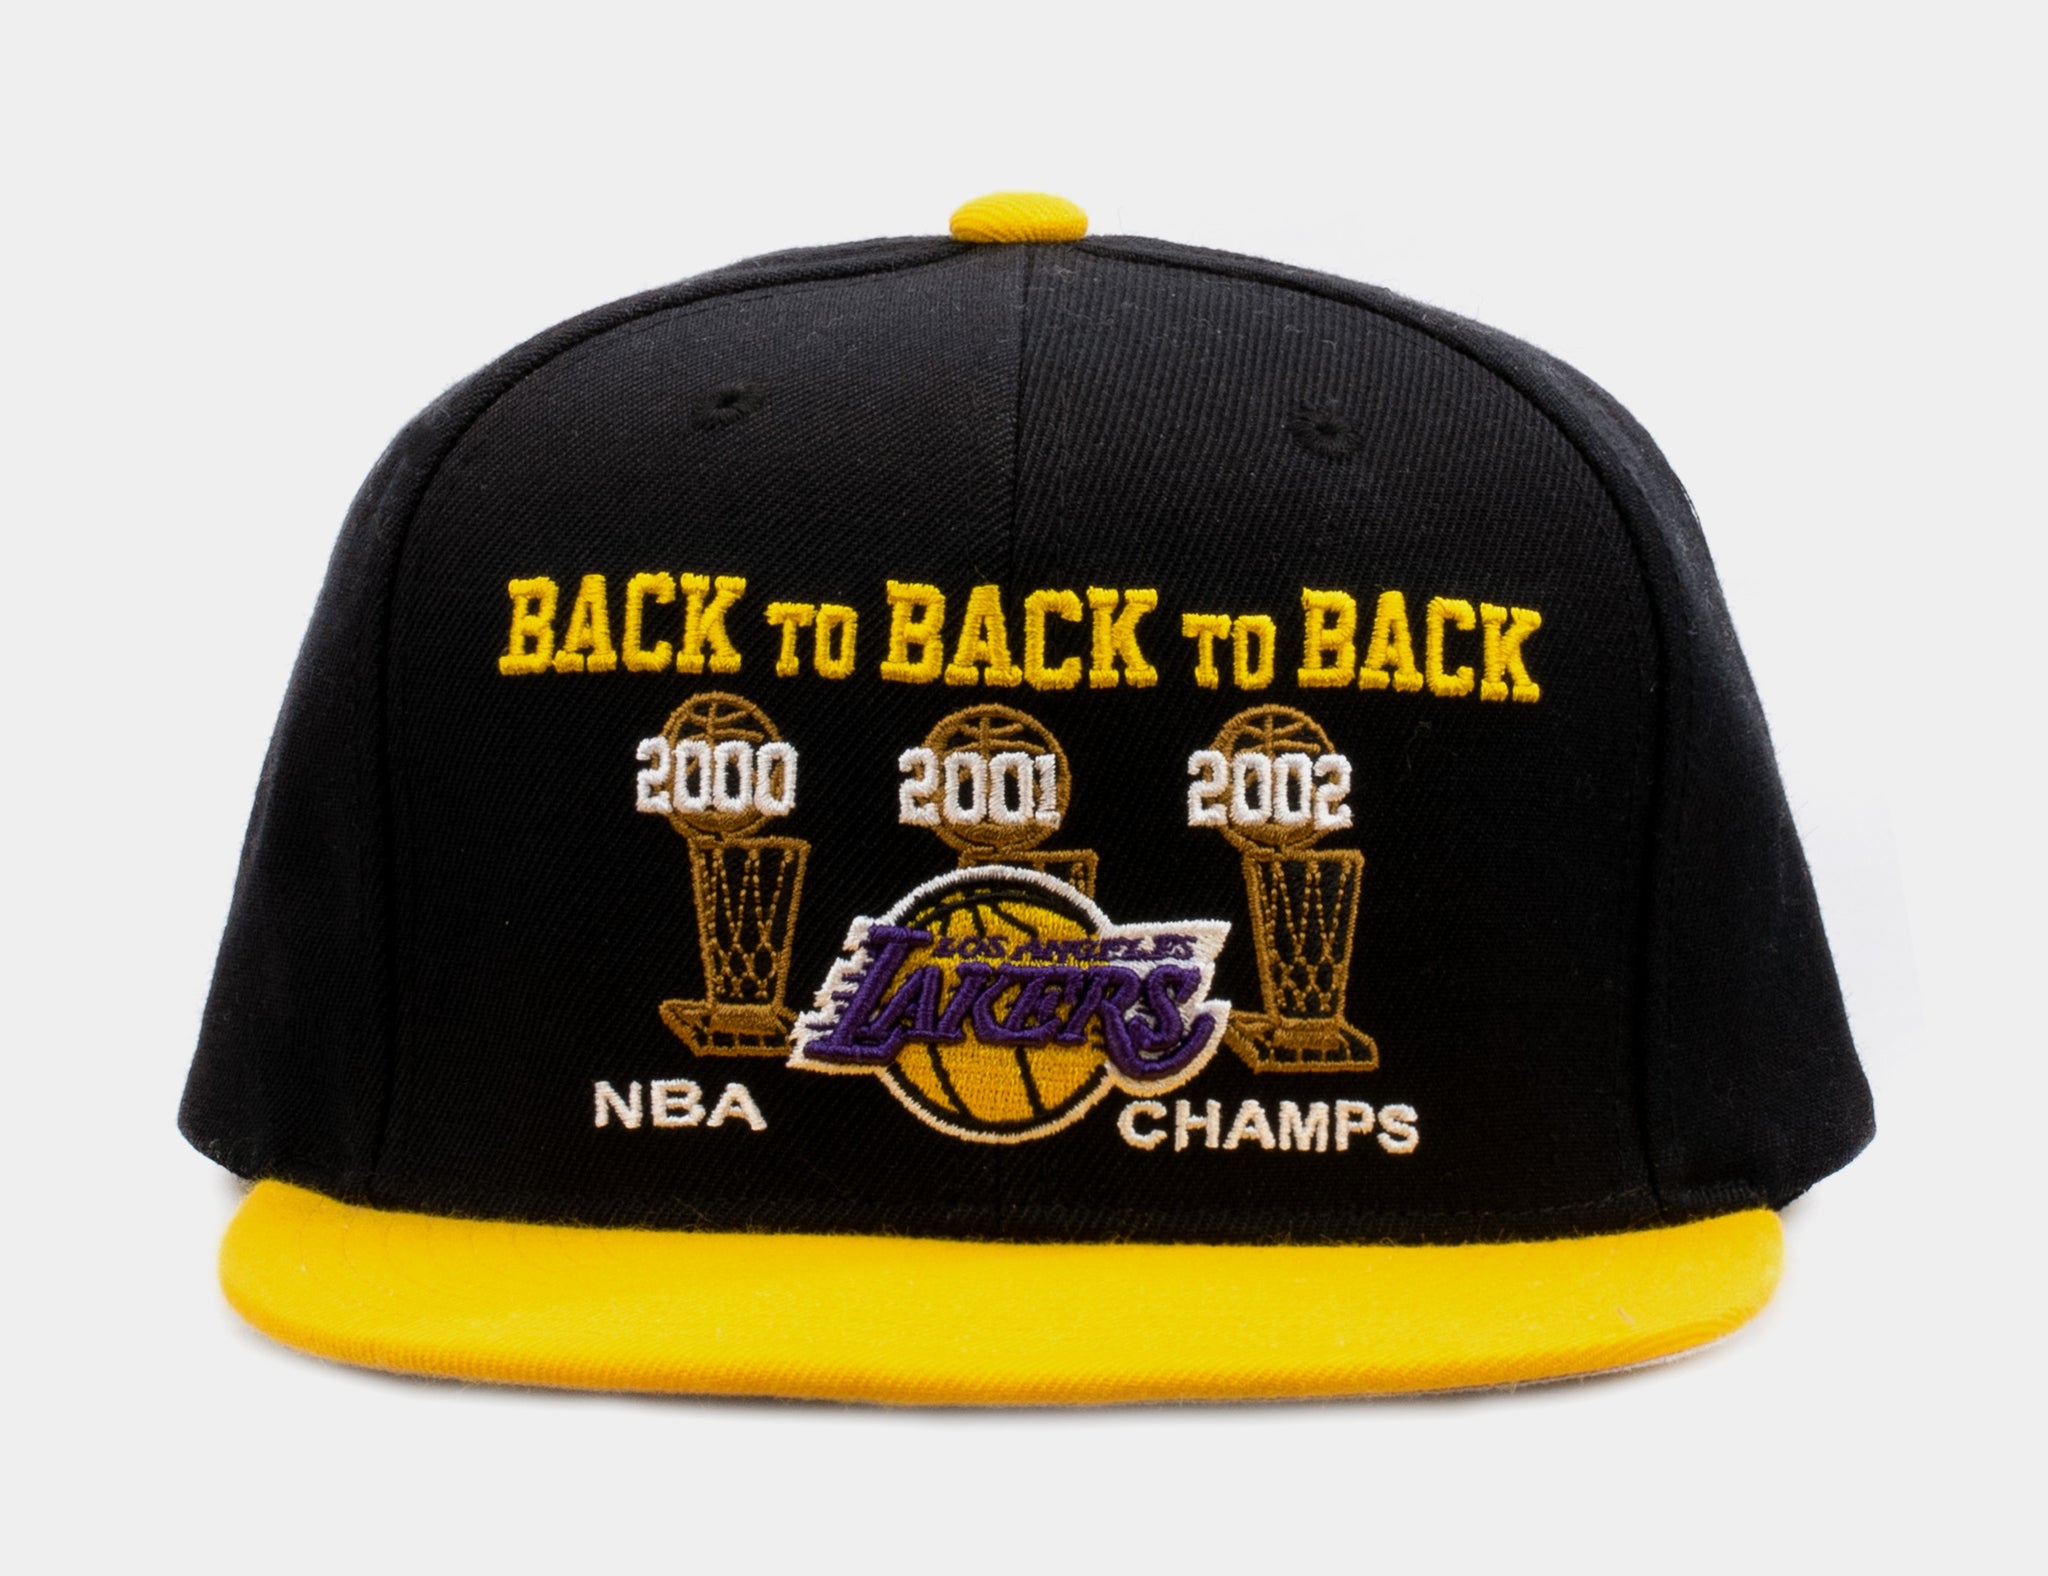 Men's Mitchell & Ness Black Los Angeles Lakers Custom Patch Snapback Hat